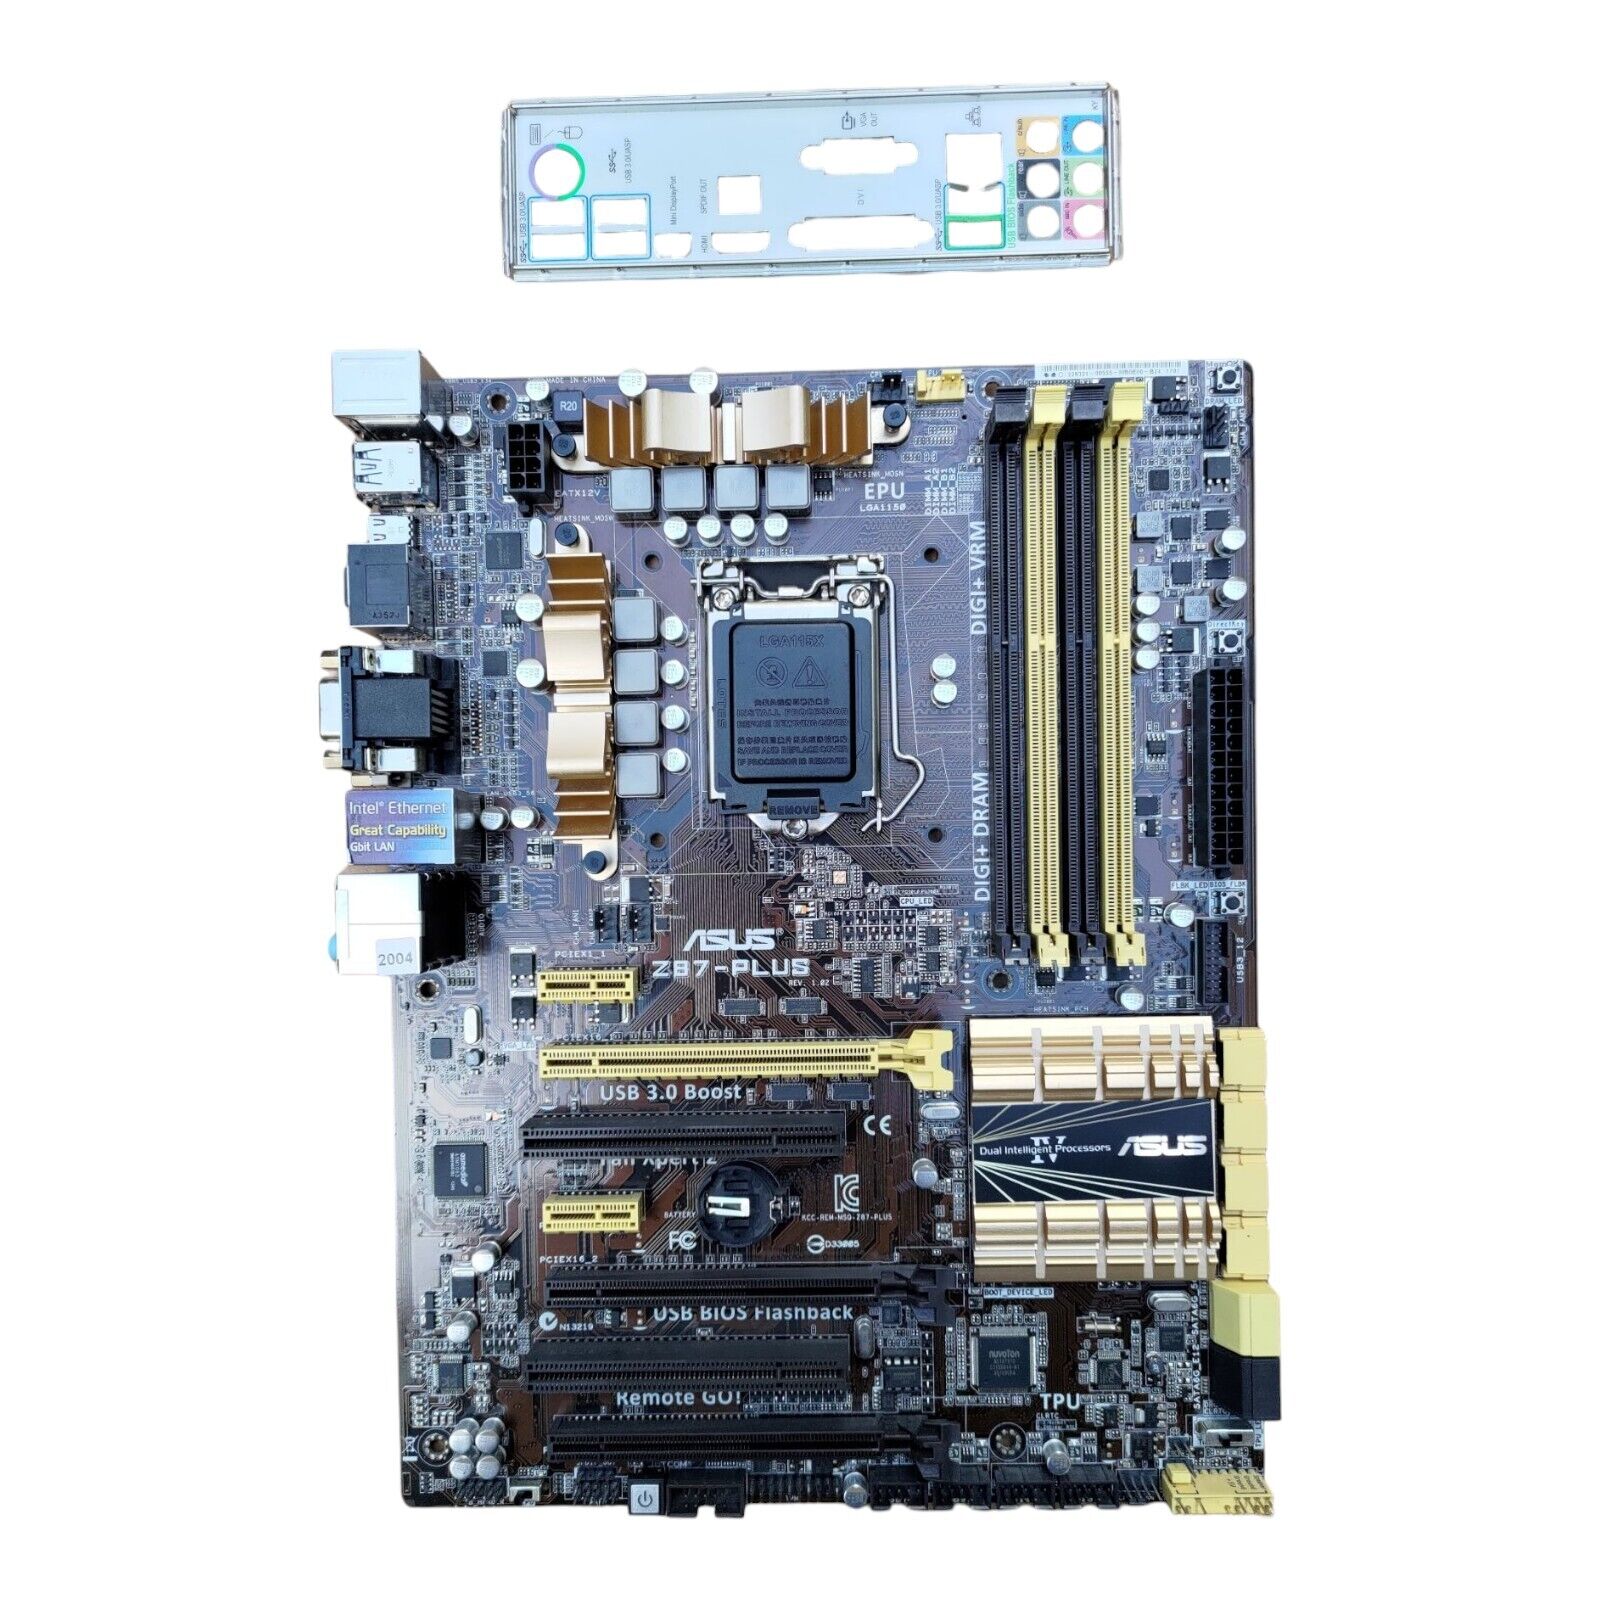 Asus Z87-PLUS Intel LGA 1150 DDR3 ATX Motherboard